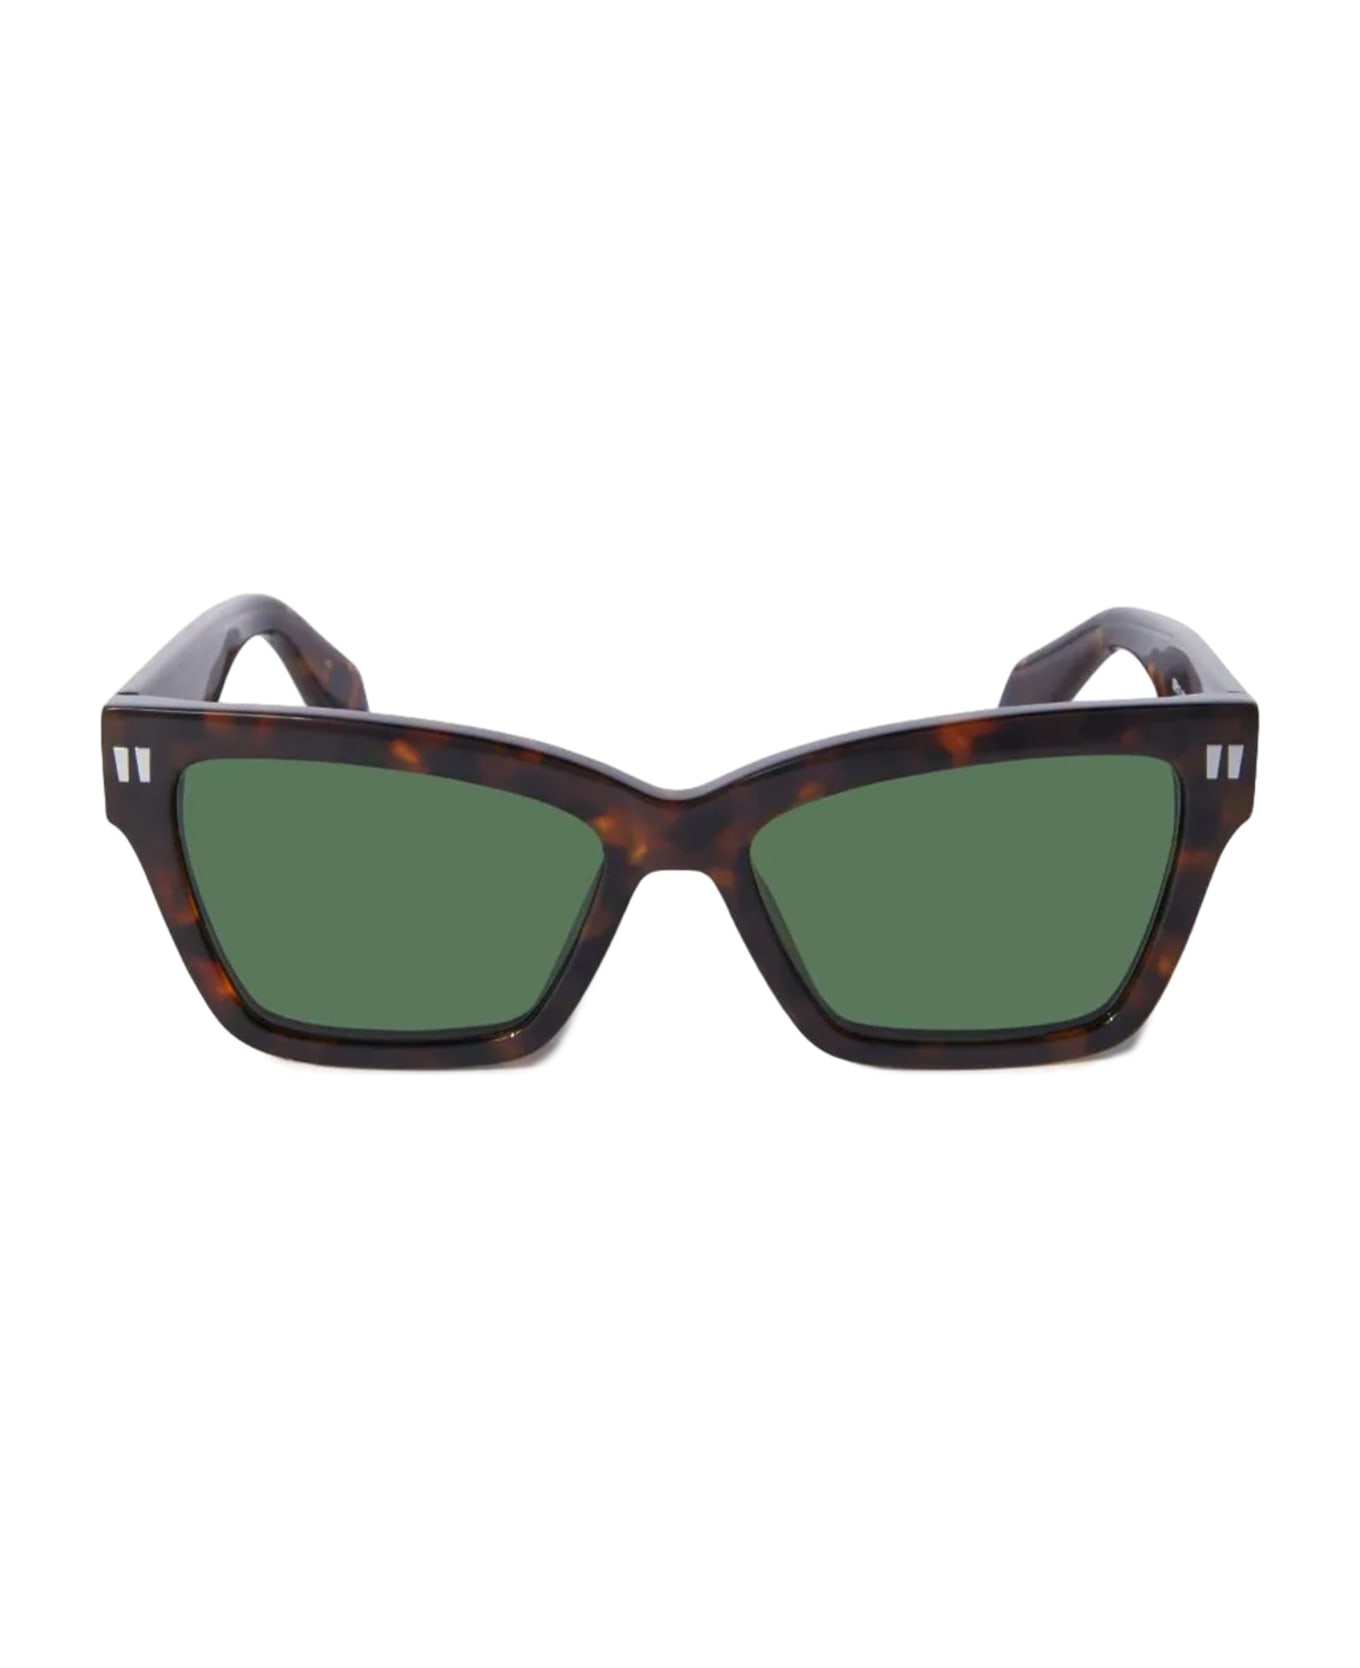 Off-White Cincinnati - Havana / Green Sunglasses - Havana